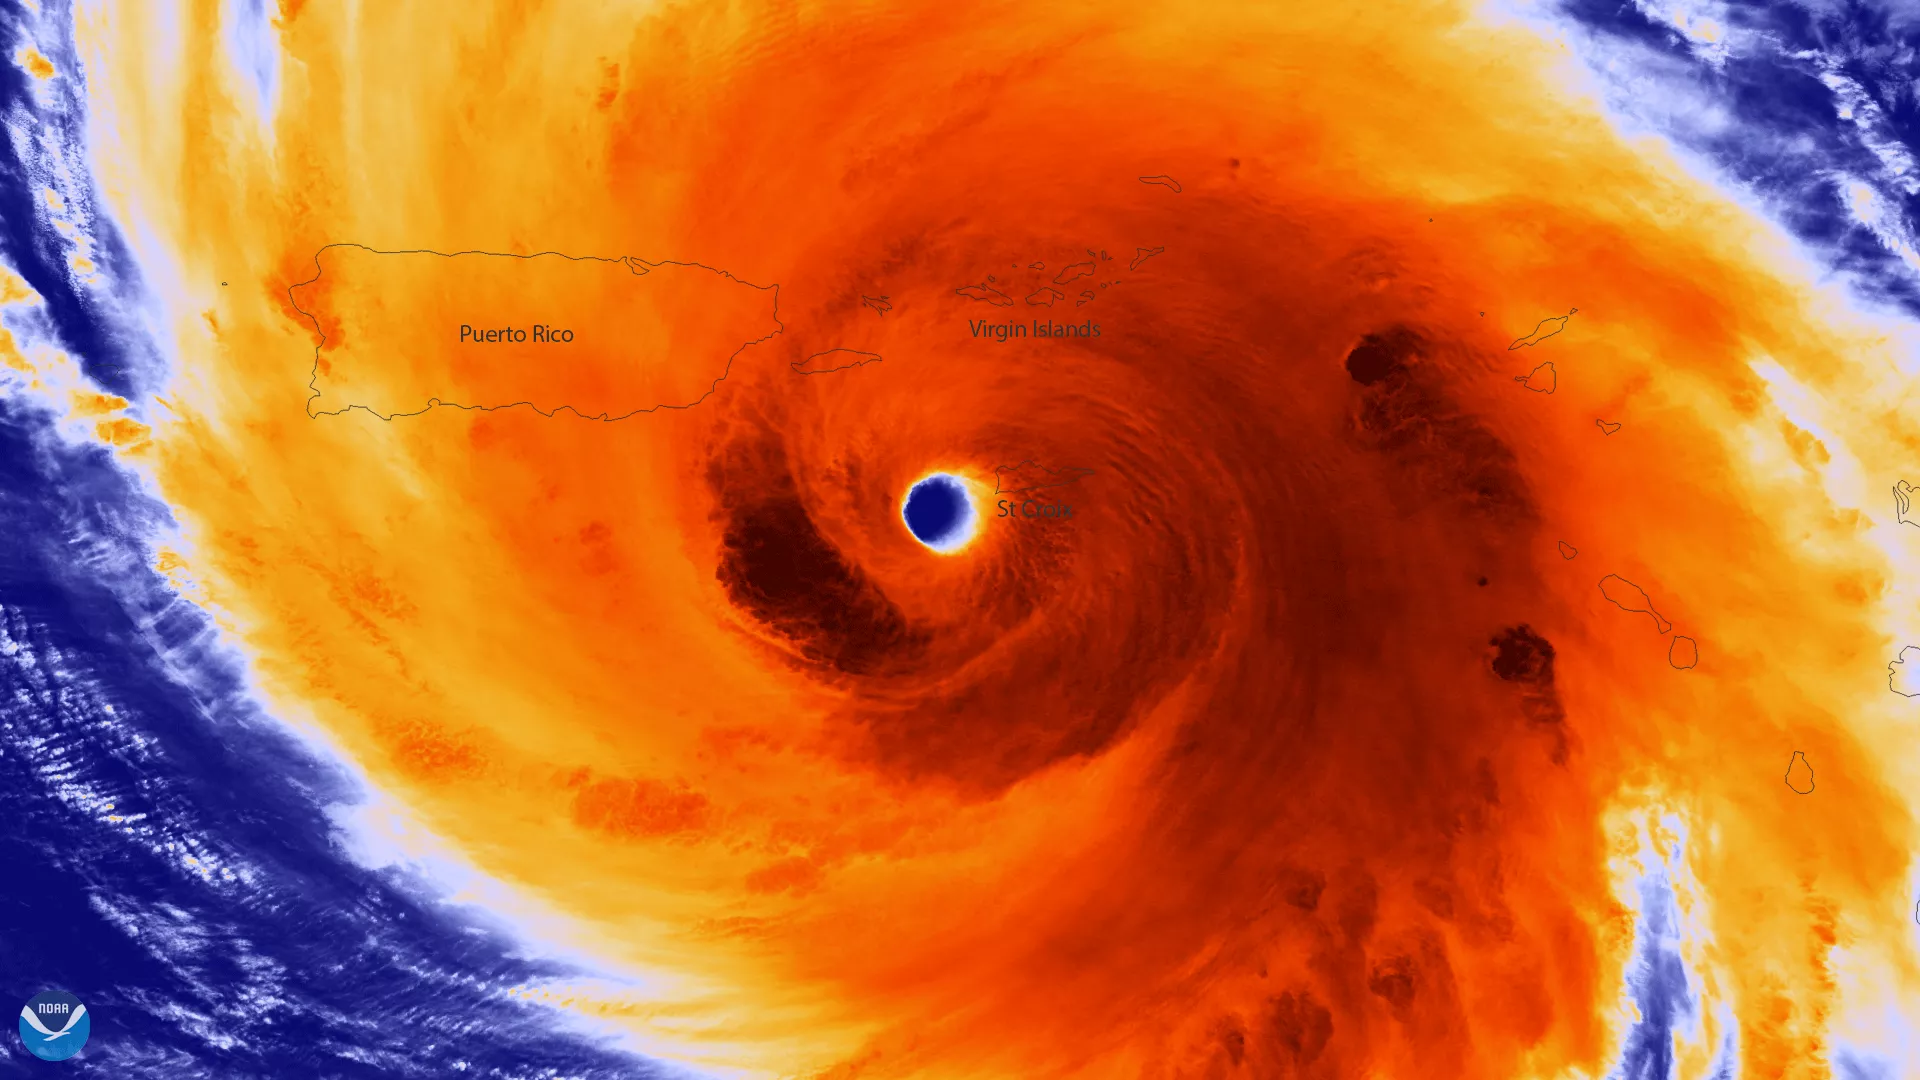 Image of the eye of hurricane maria